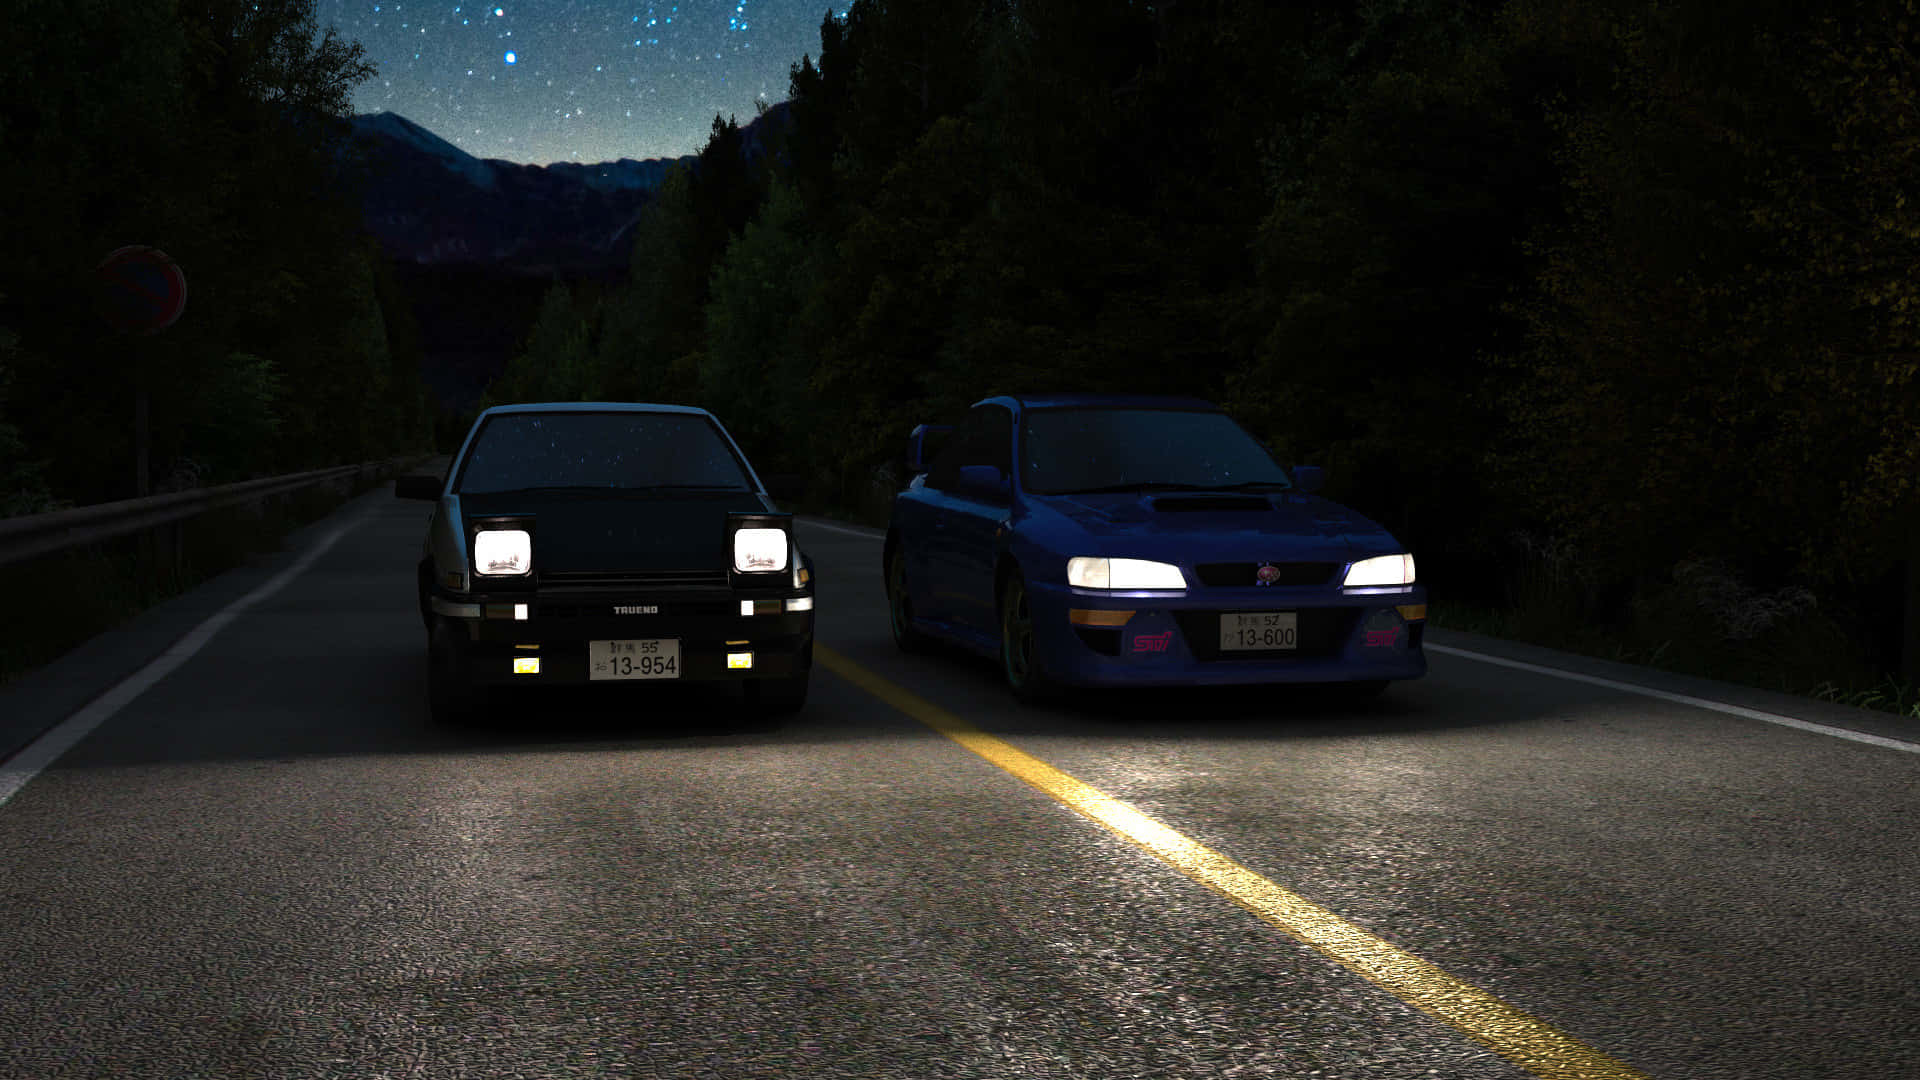 Toyota AE86 And Subaru Impreza Night Race Initial D Background